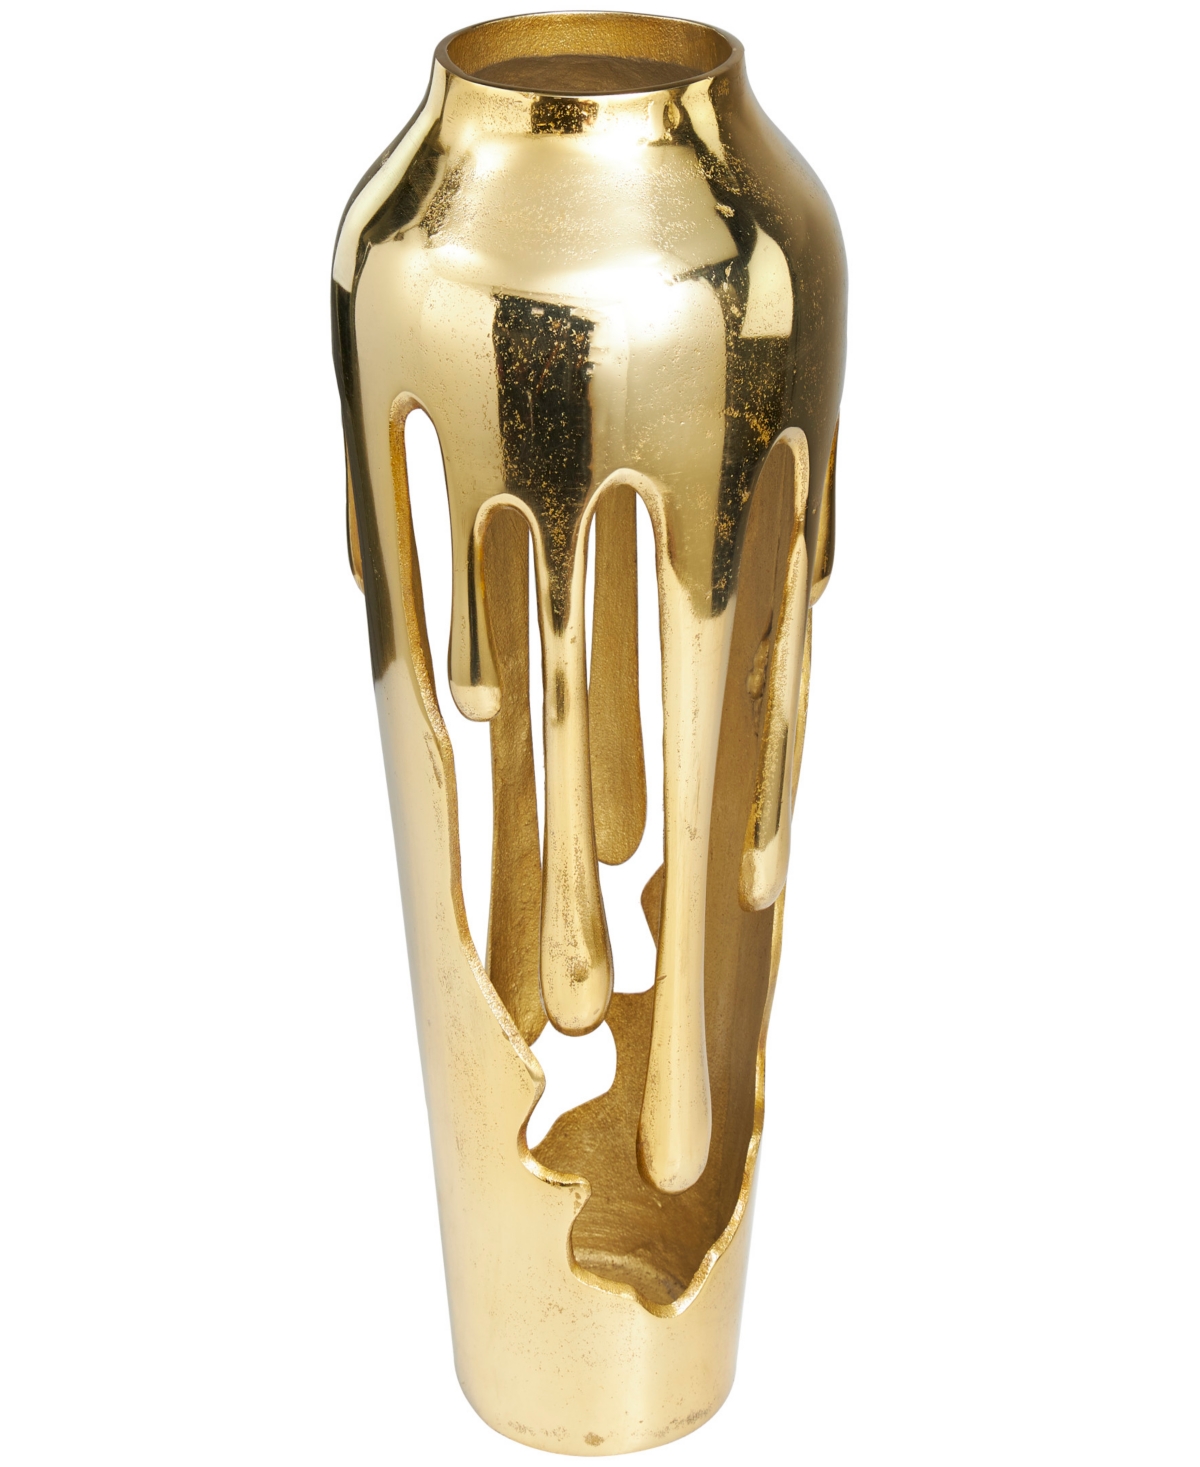 Rosemary Lane Aluminum Drip Vase With Melting Designed Body, 8" X 8" X 19" In Gold